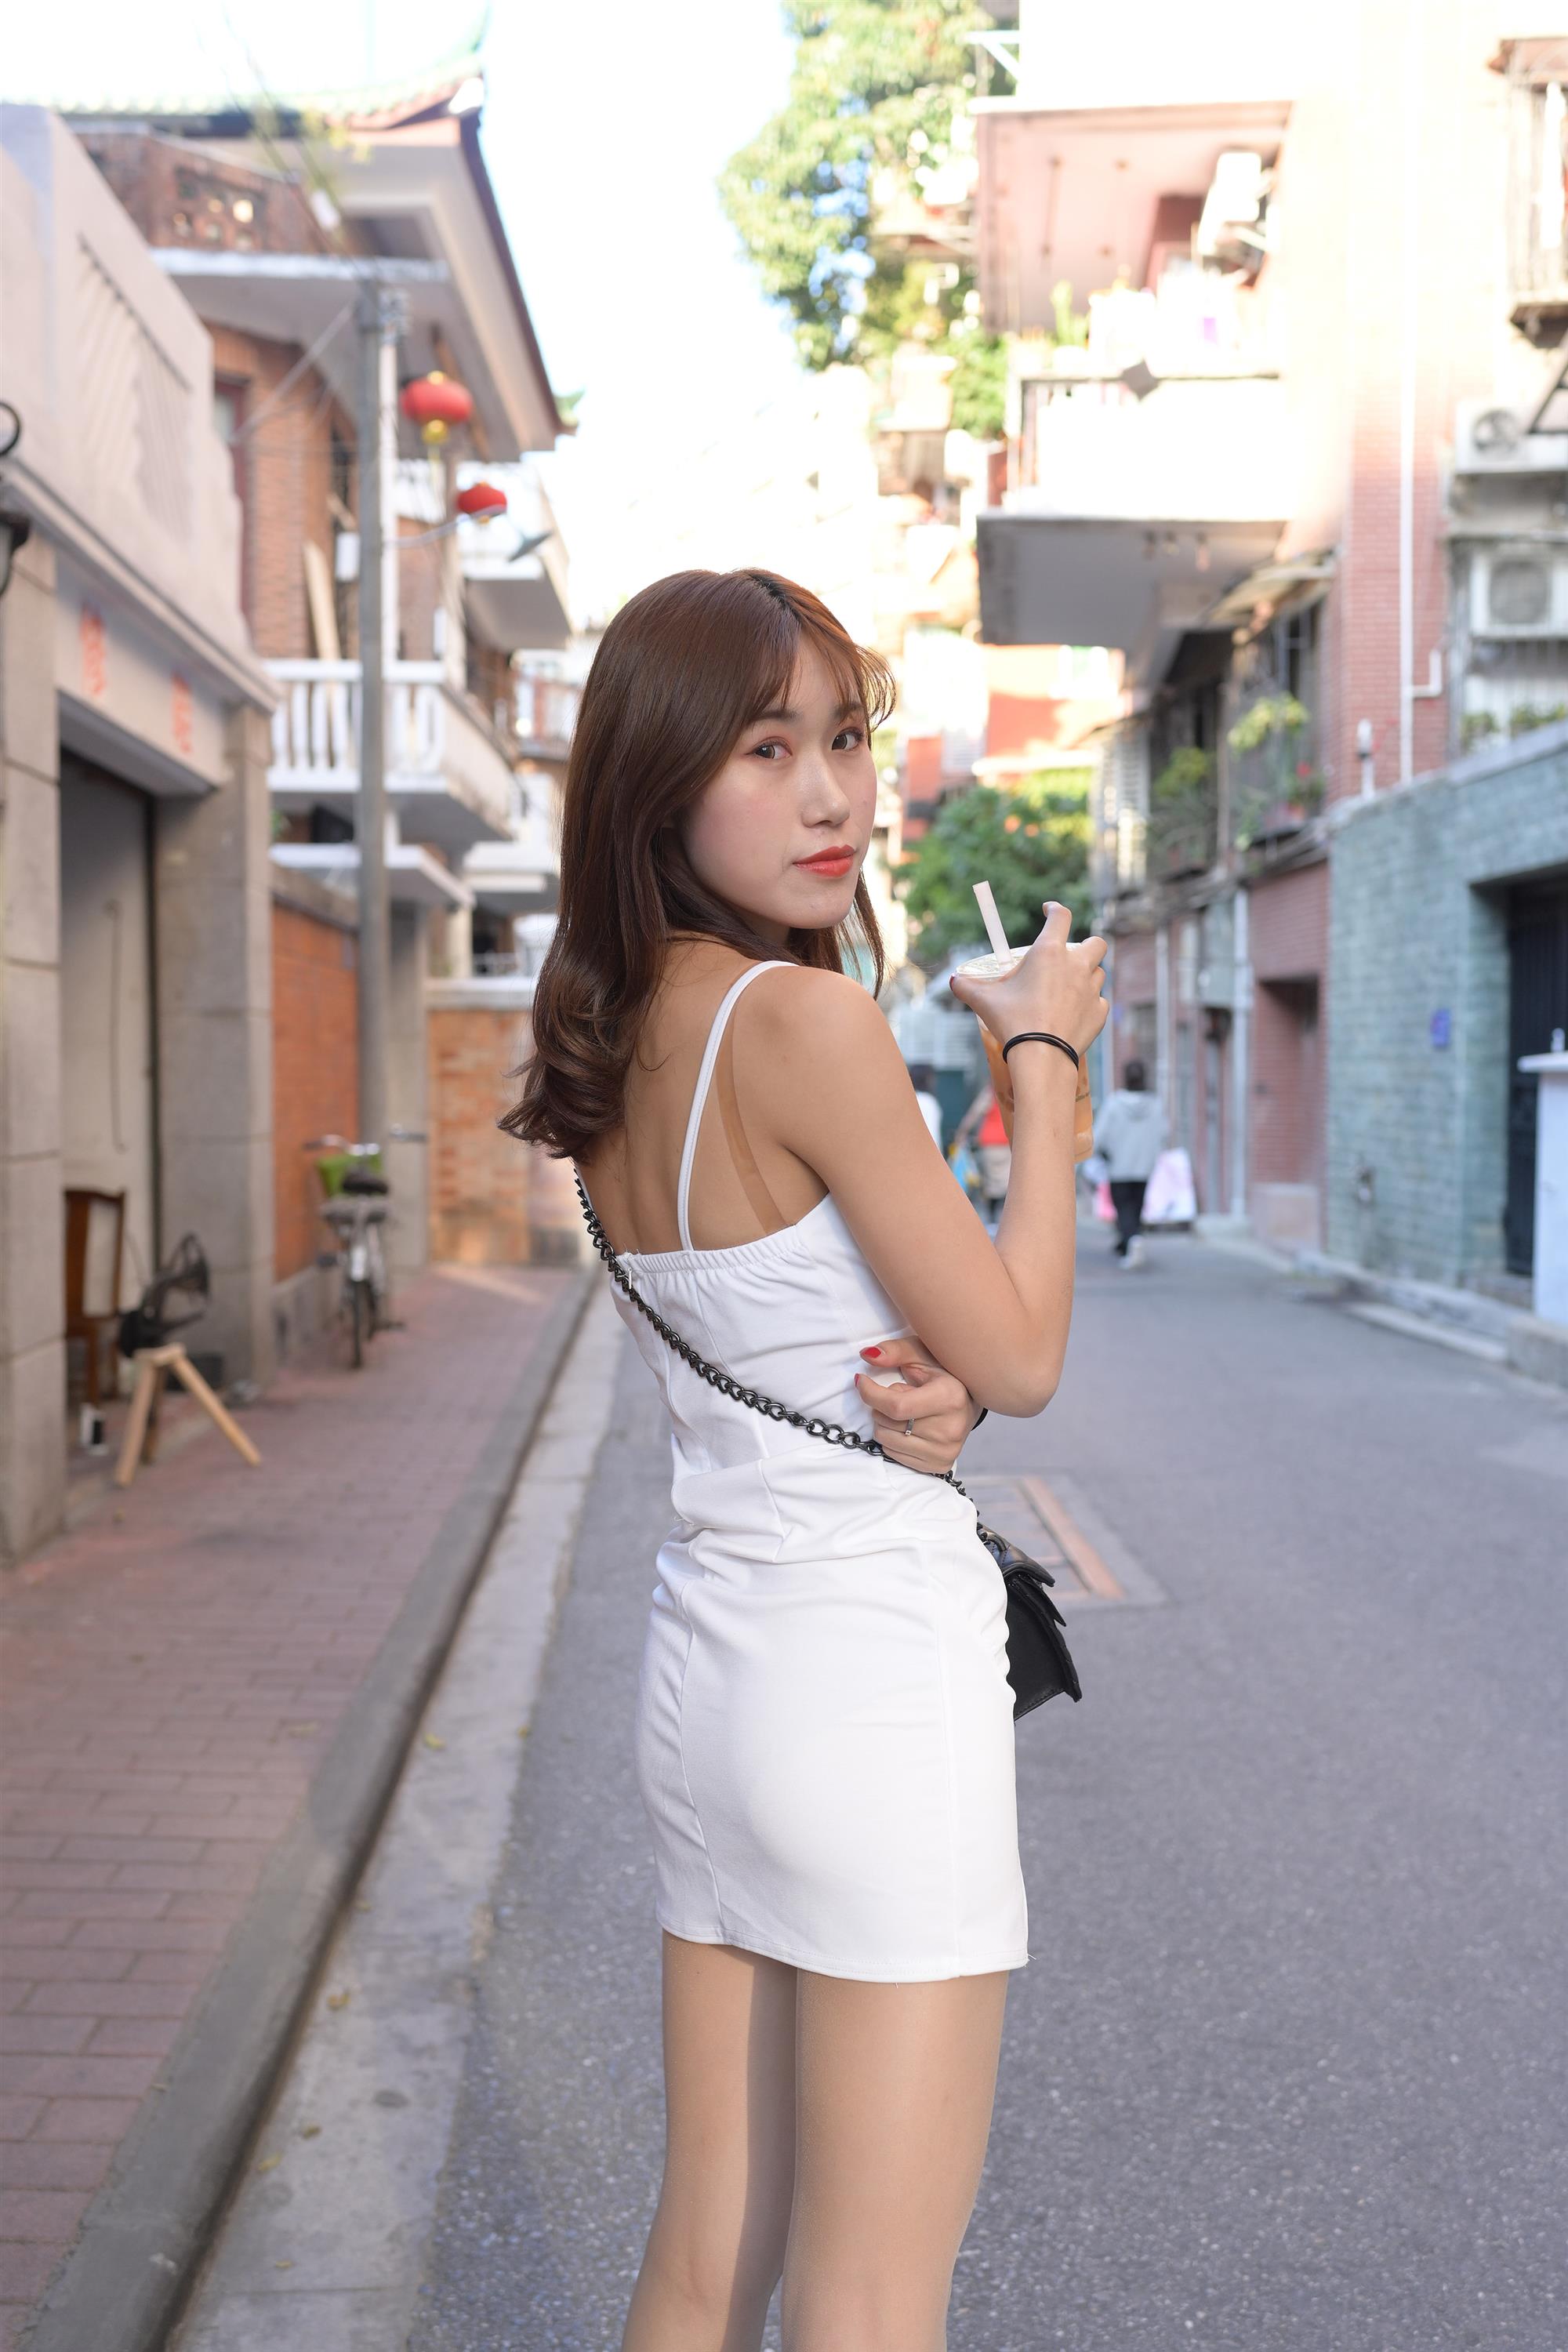 Street white dress and high heels - 18.jpg